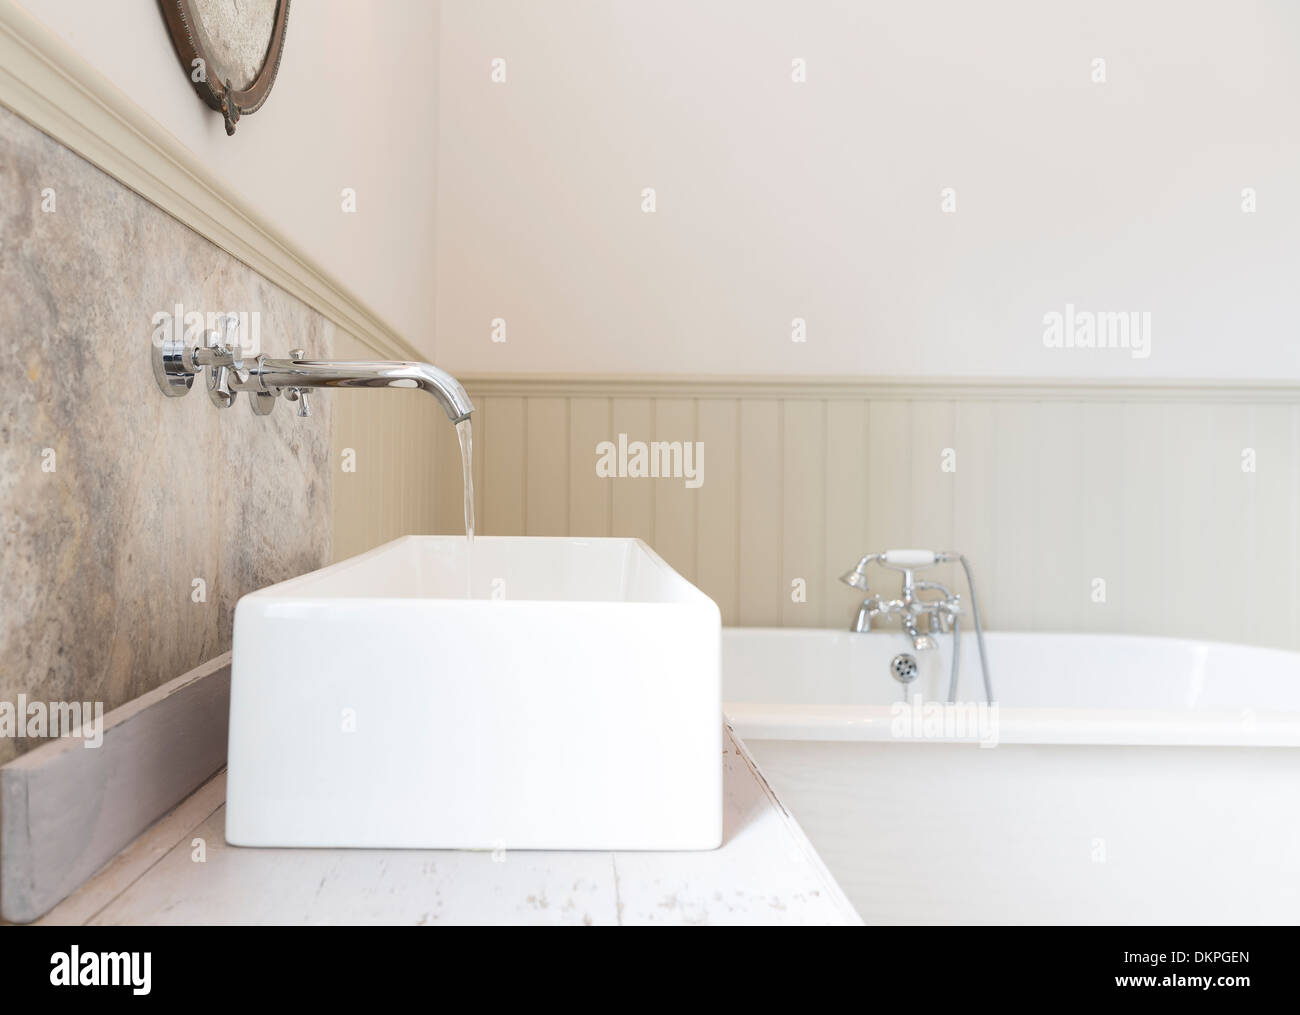 Sink and bathtub in luxury bathroom Stock Photo